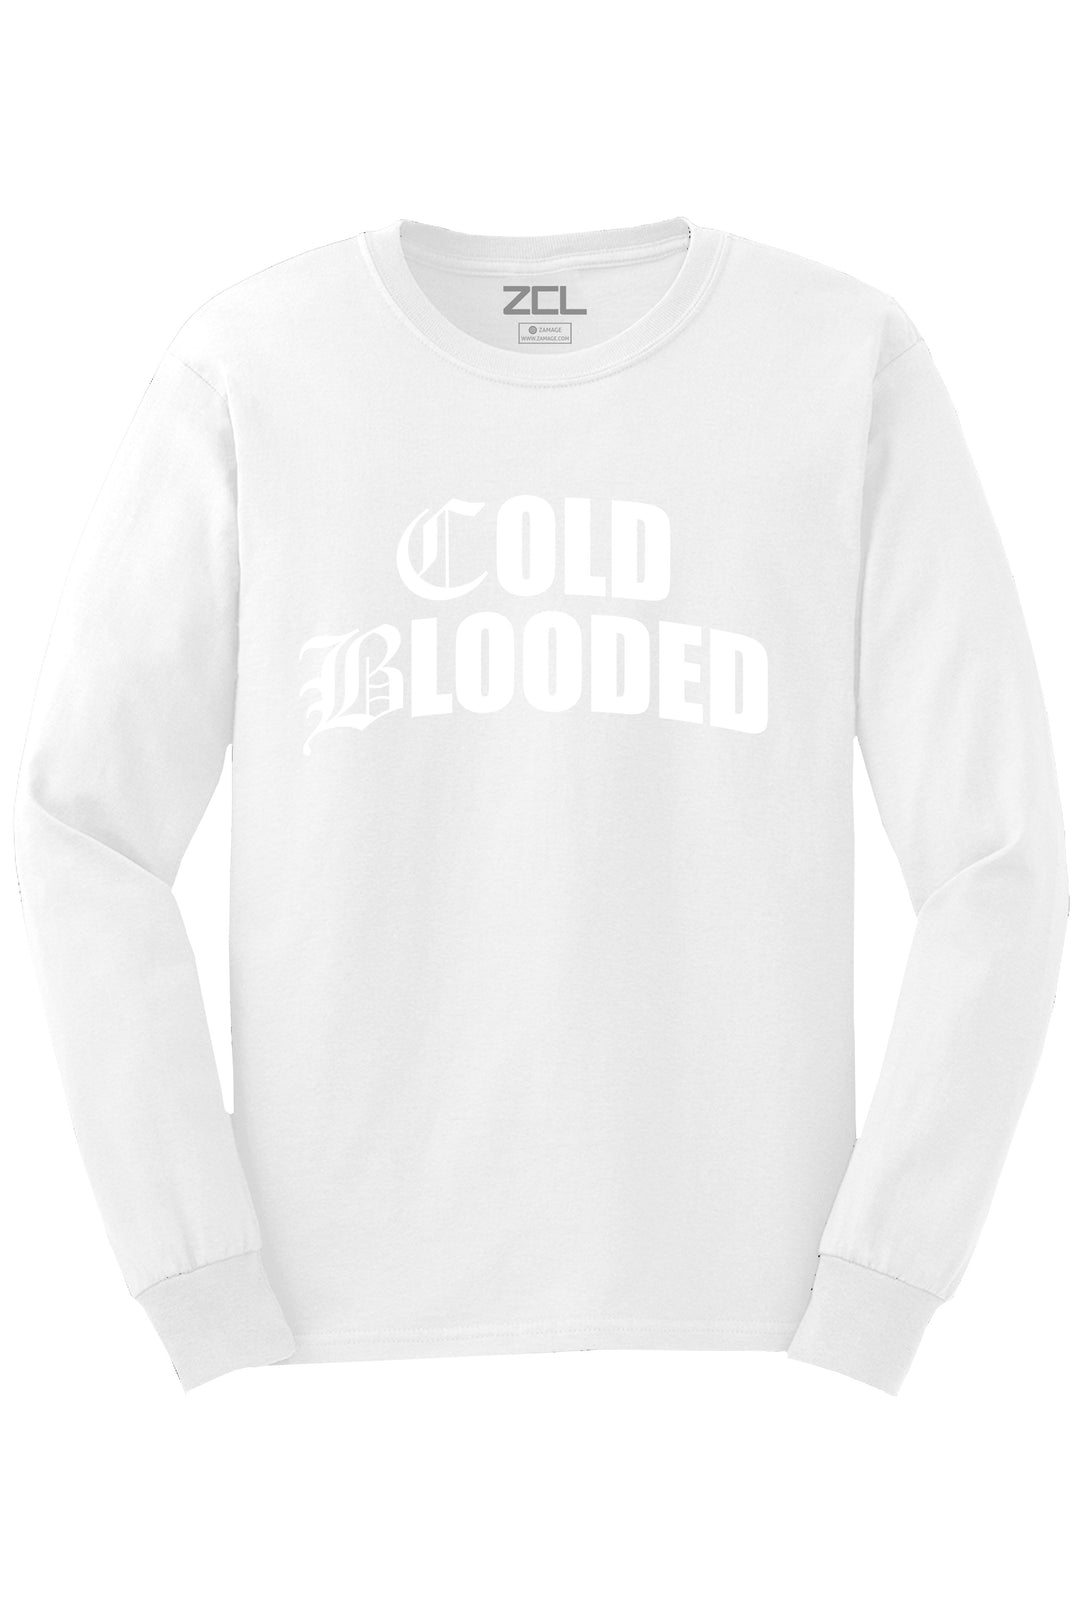 Cold Blooded Long Sleeve Tee (White Logo) - Zamage